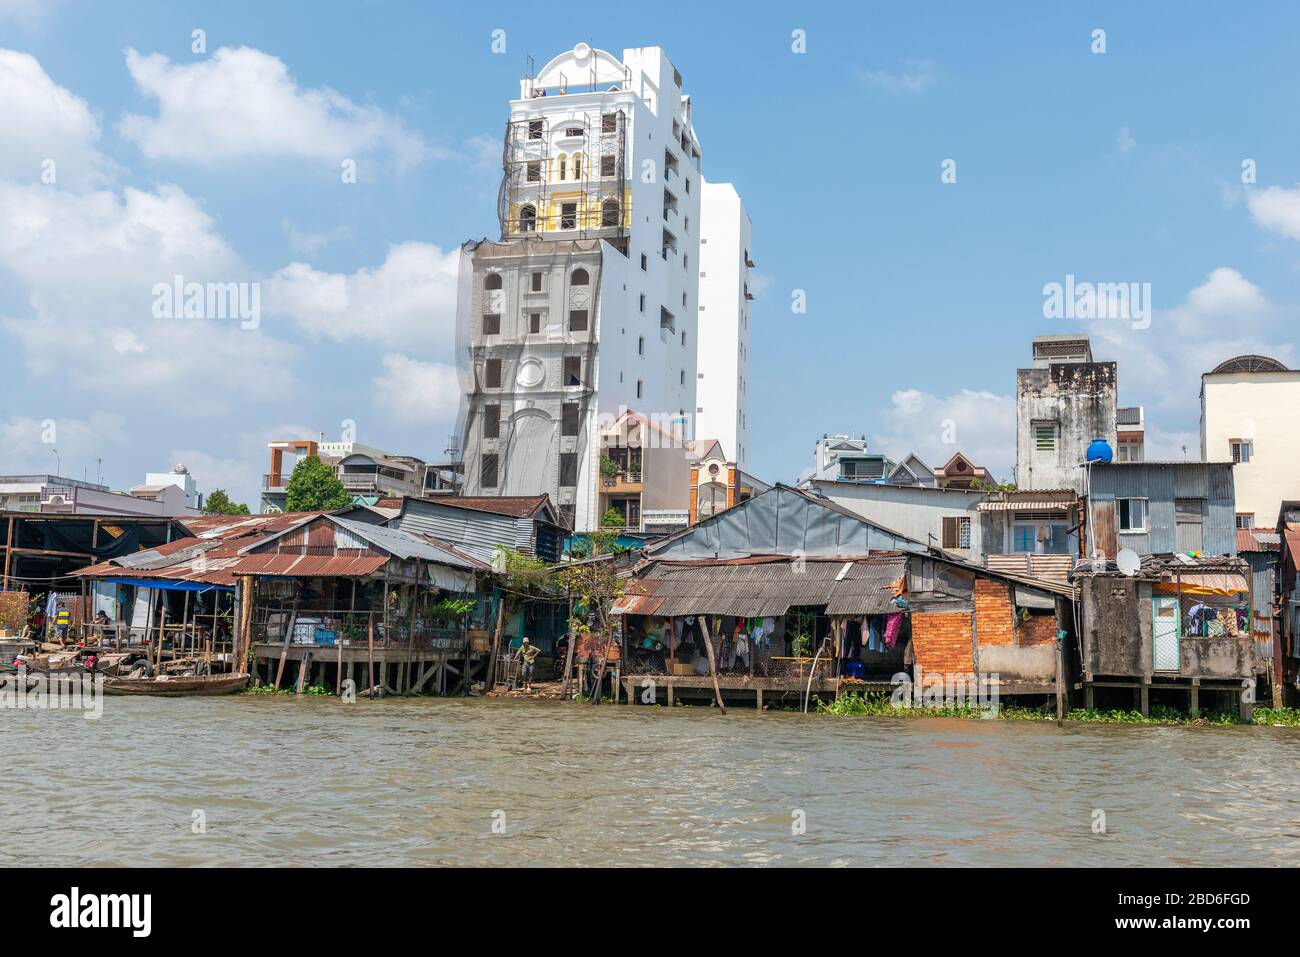 Am Wasser in Cai Rang Town, Chau Thanh District, Südvietnam Stockfoto